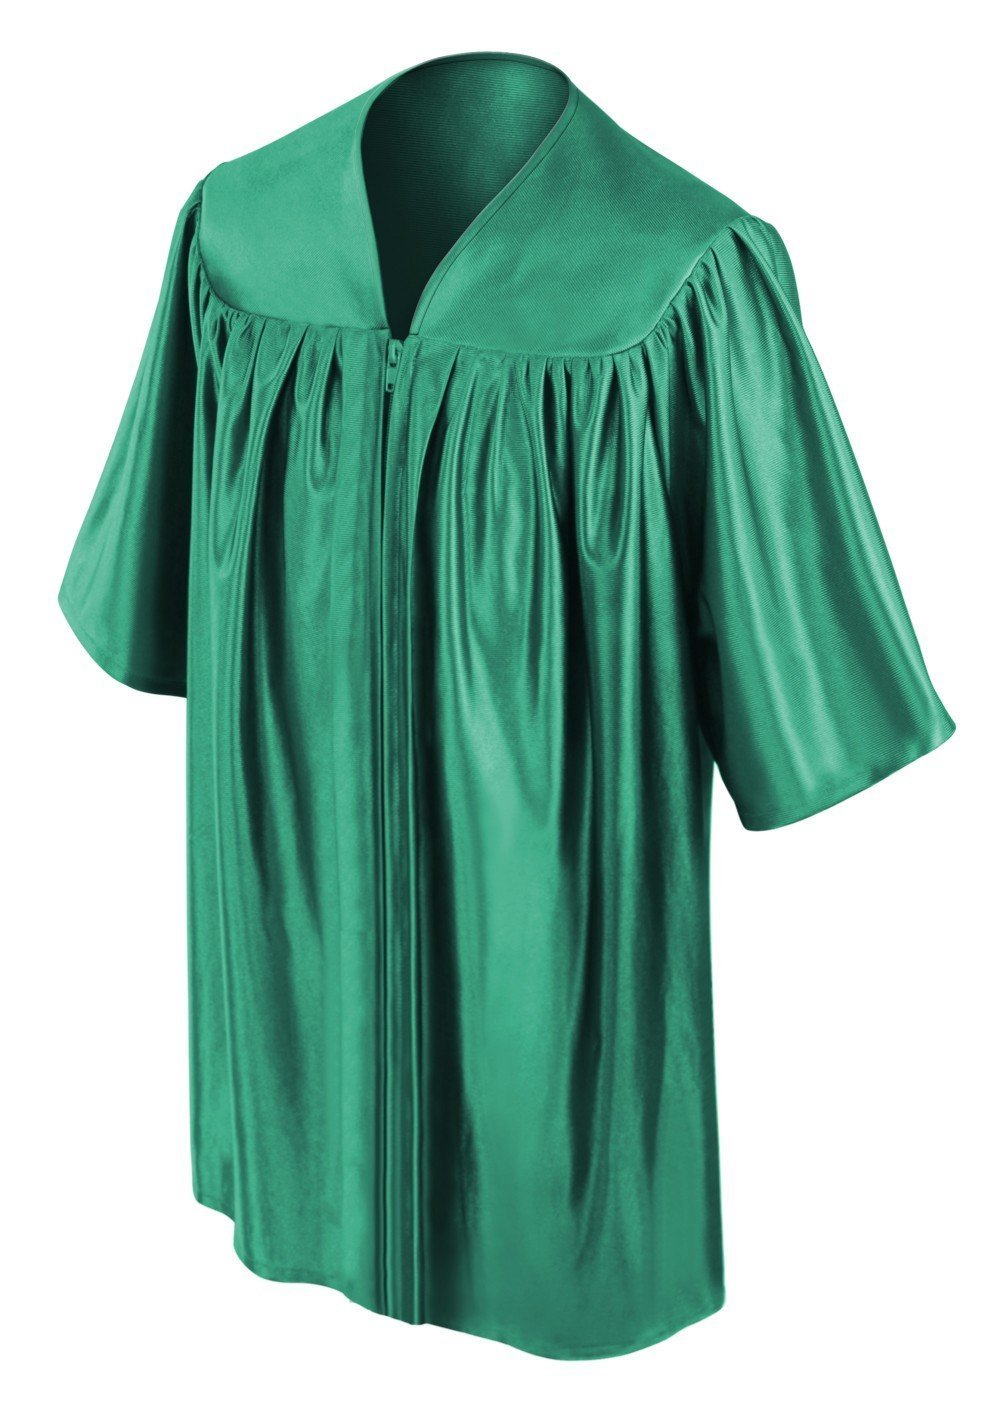 Child's Emerald Green Choir Robe - Churchings